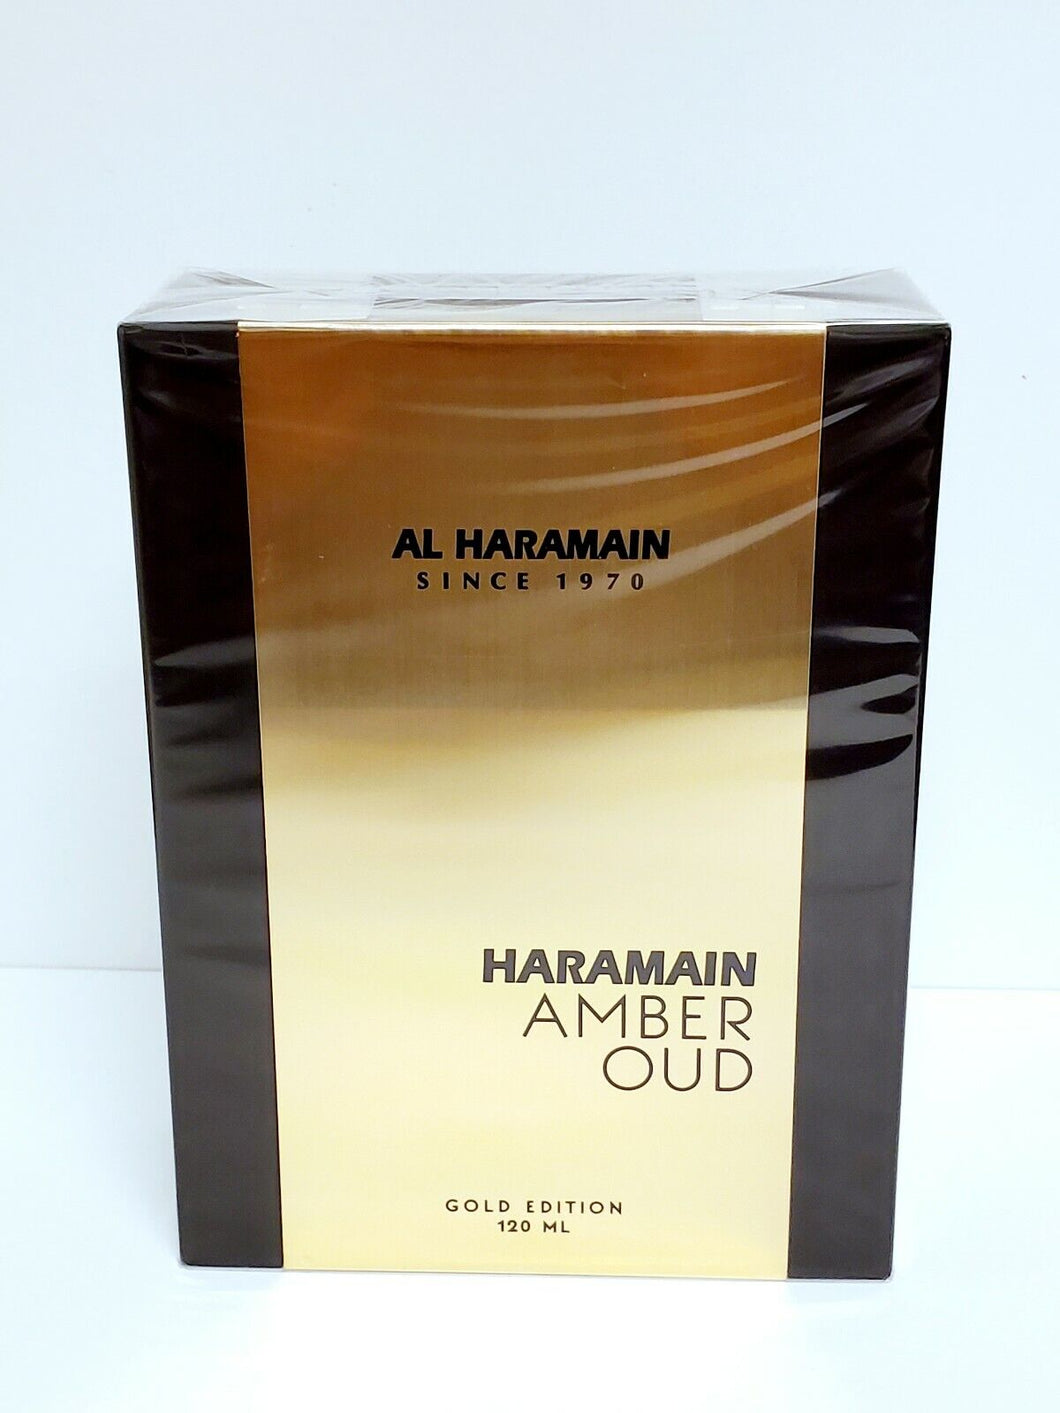 Al Haramain Amber Oud GOLD EDITION 4 oz 120 ml Eau de Parfum Spray NEW & SEALED